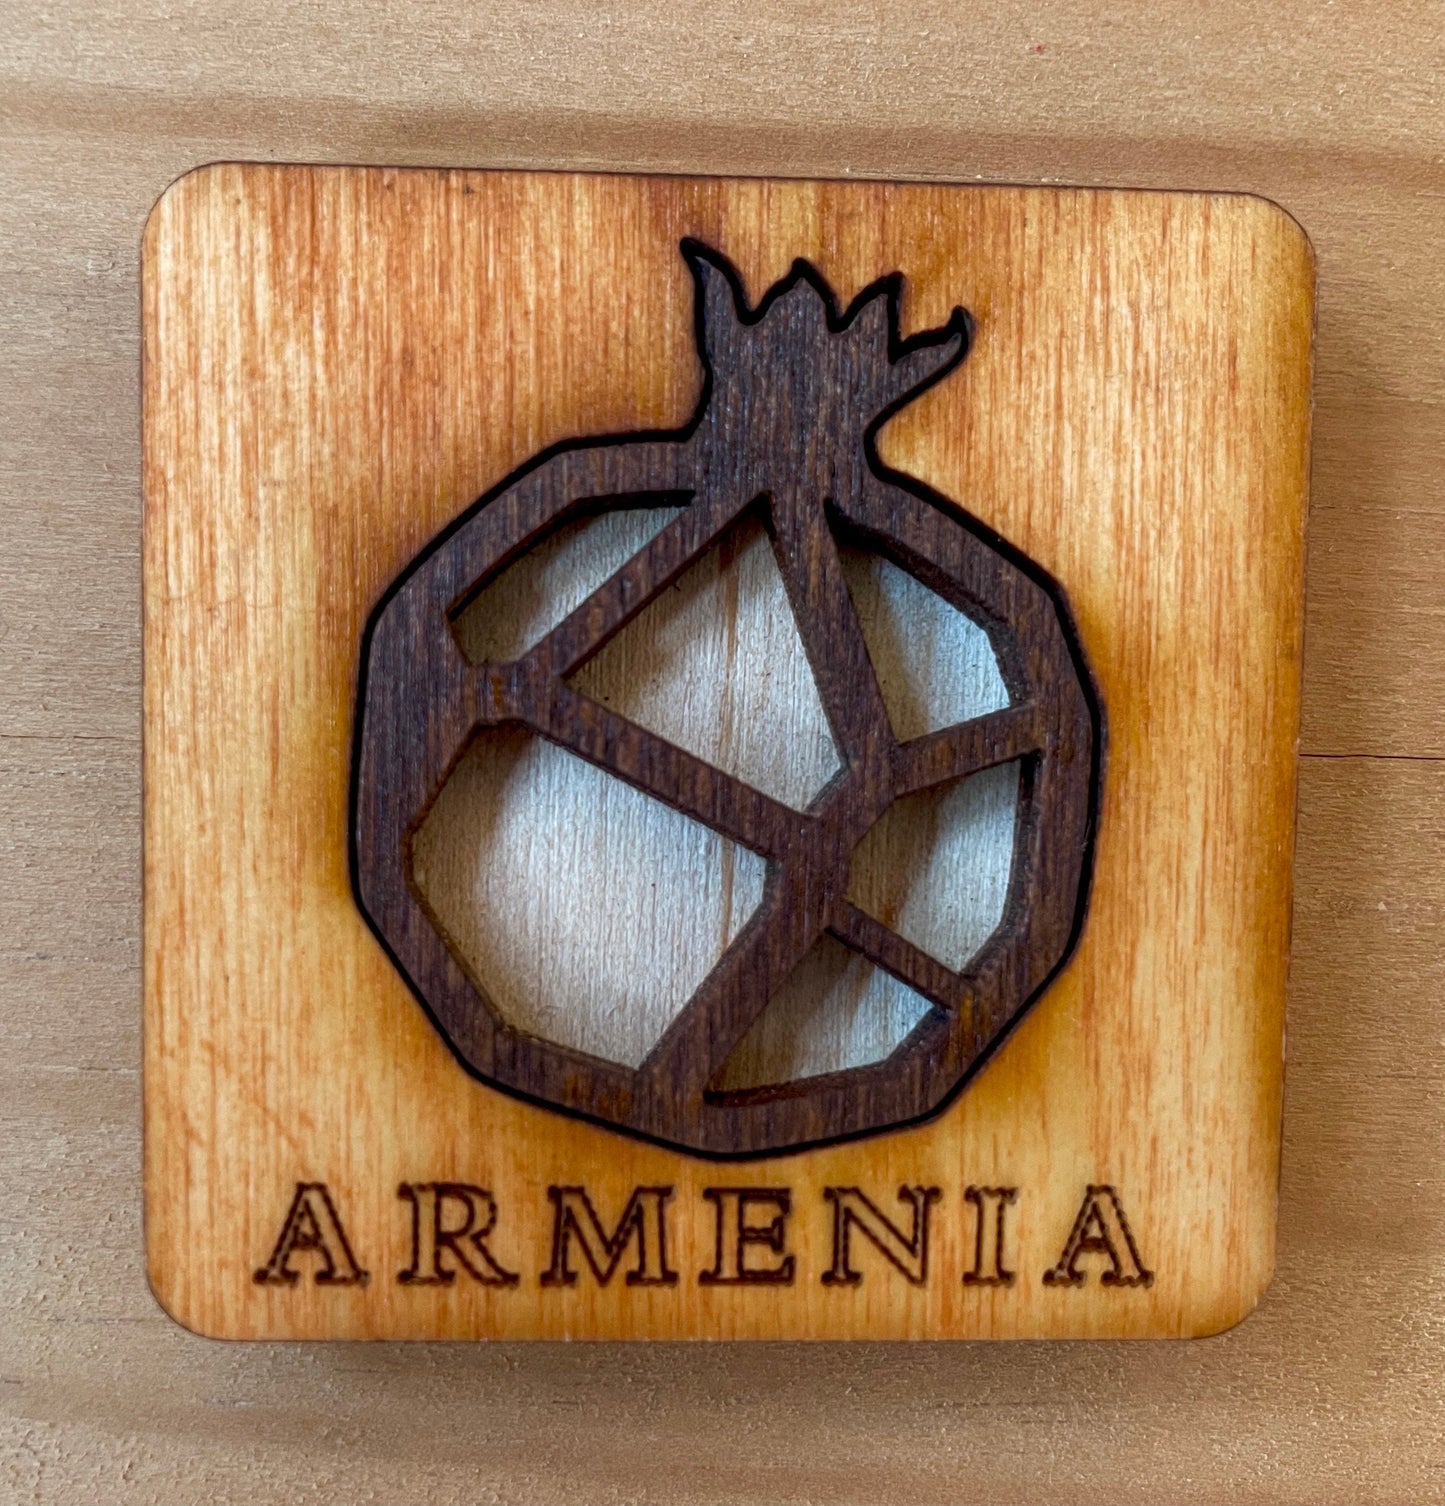 Magnet Geometric Pomegranate Armenia Wood Square 5cm x 5cm